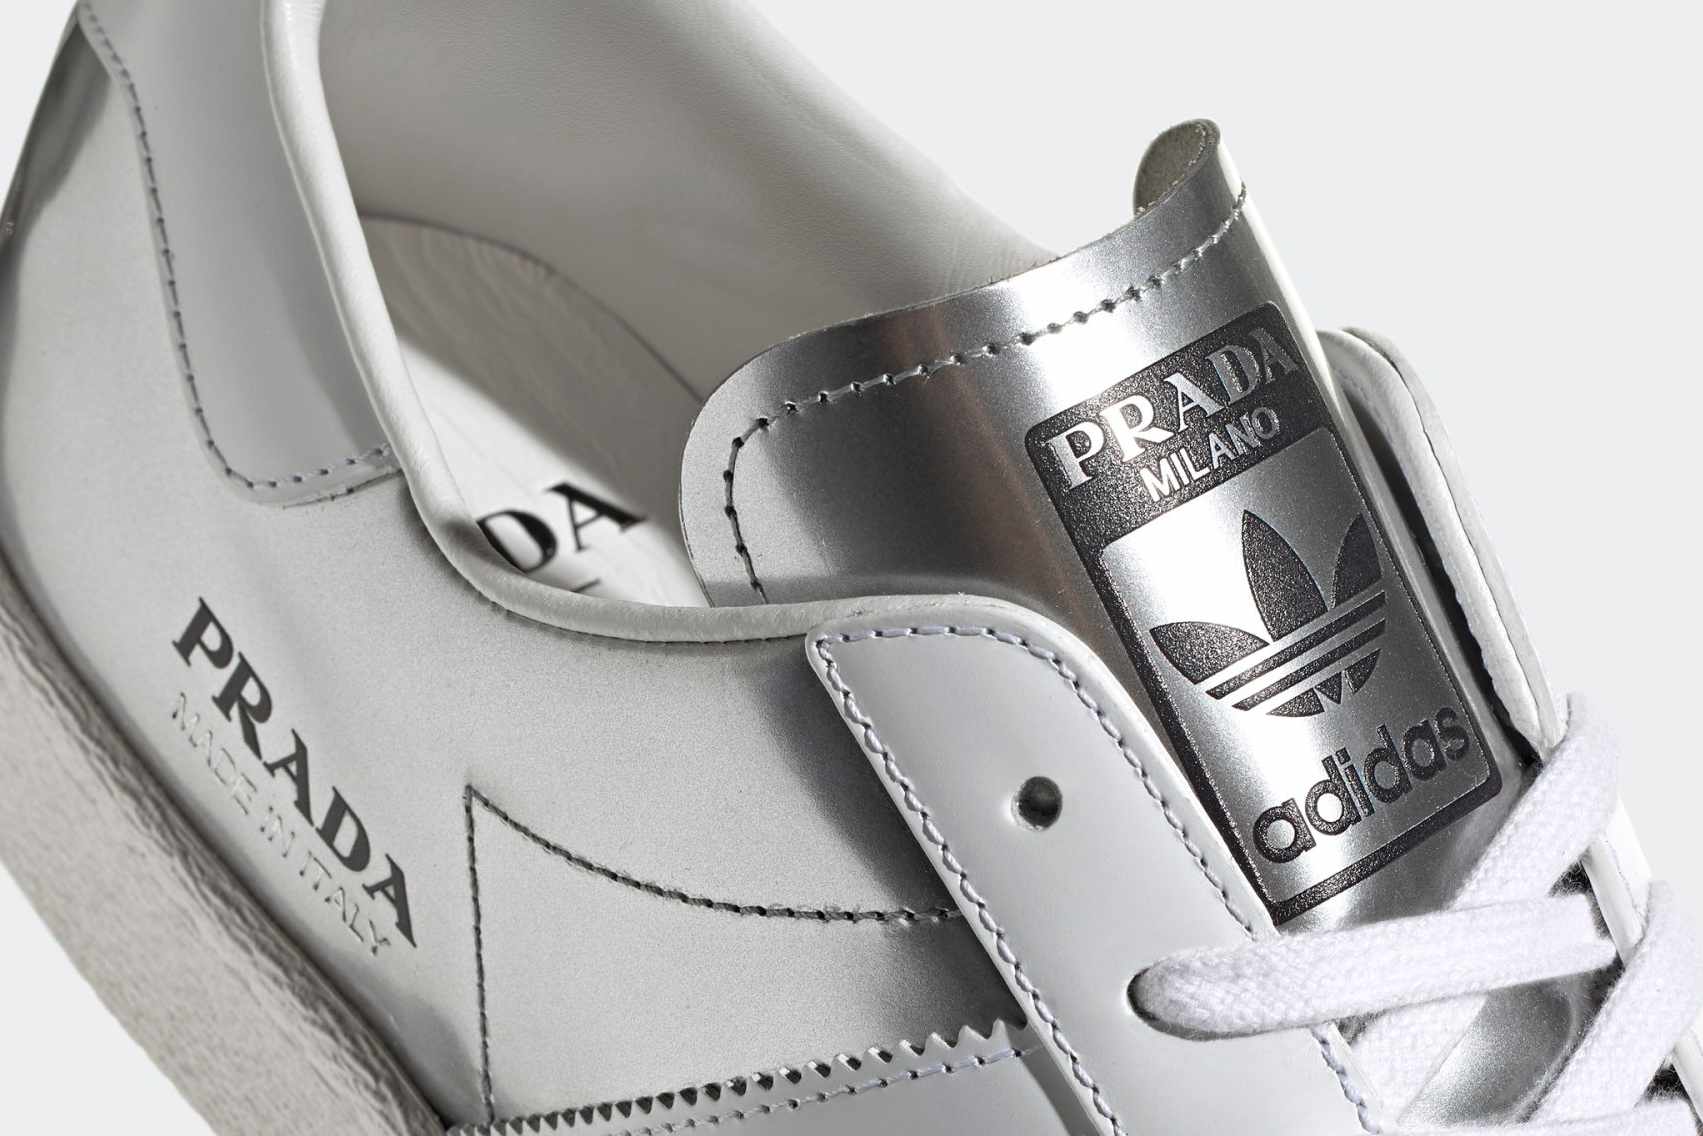 First look at Jerry Lorenzo's adidas x Prada sneaker collab